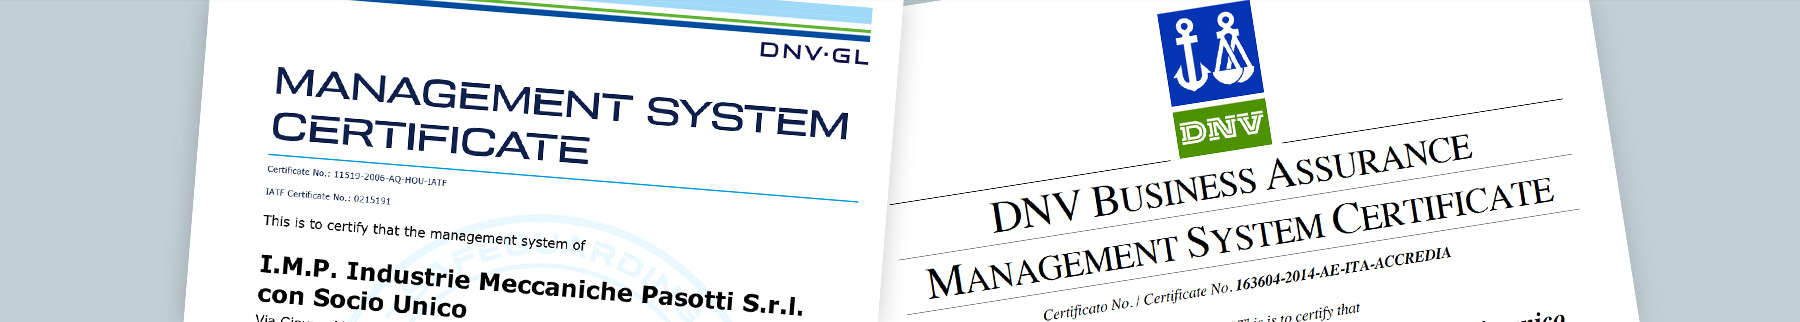 Certifications DNV